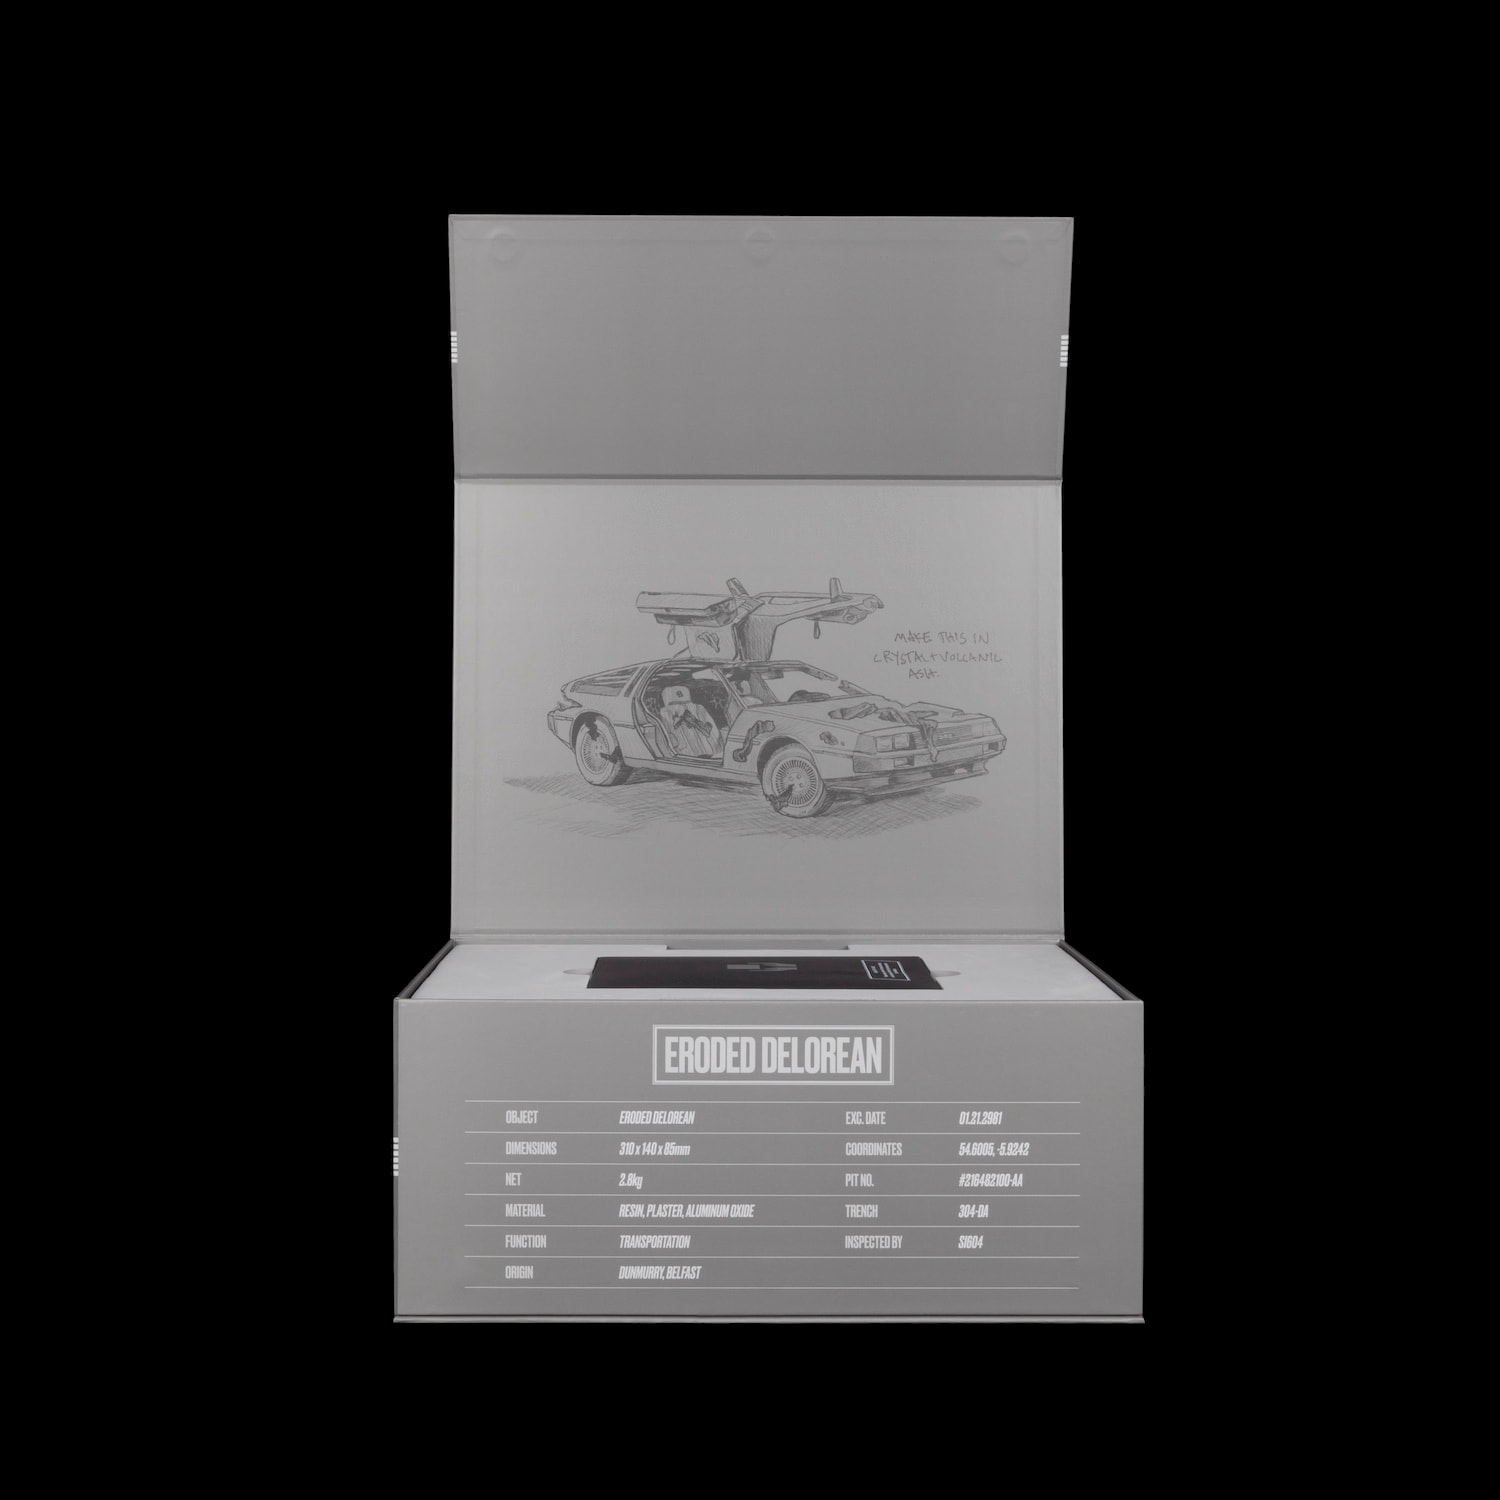 Archive Editions 携手 Daniel Arsham 发布全新限量艺术作品《被侵蚀的 DeLorean》